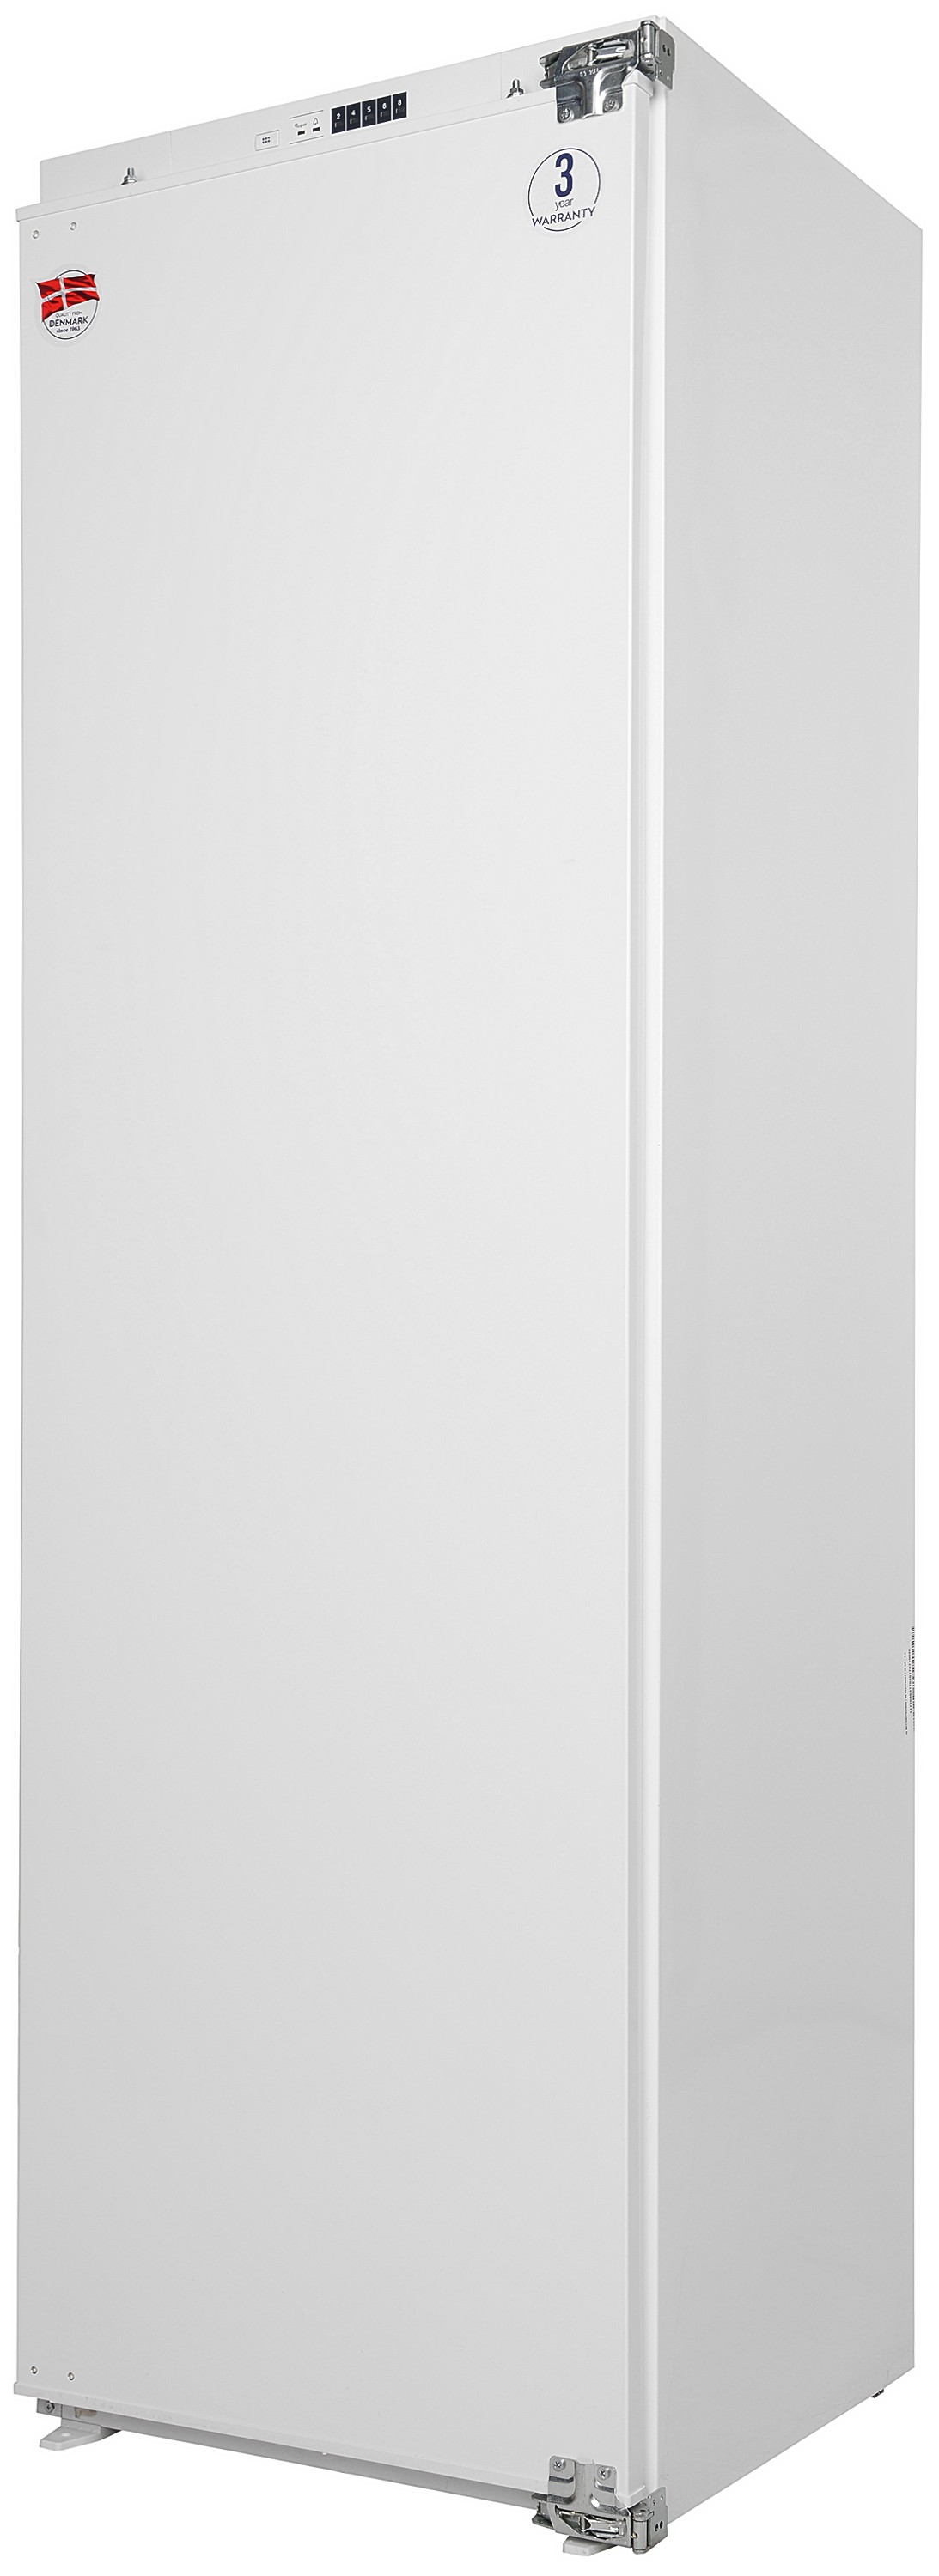 Холодильник Vestfrost IR 2795 E цена 22999.00 грн - фотография 2